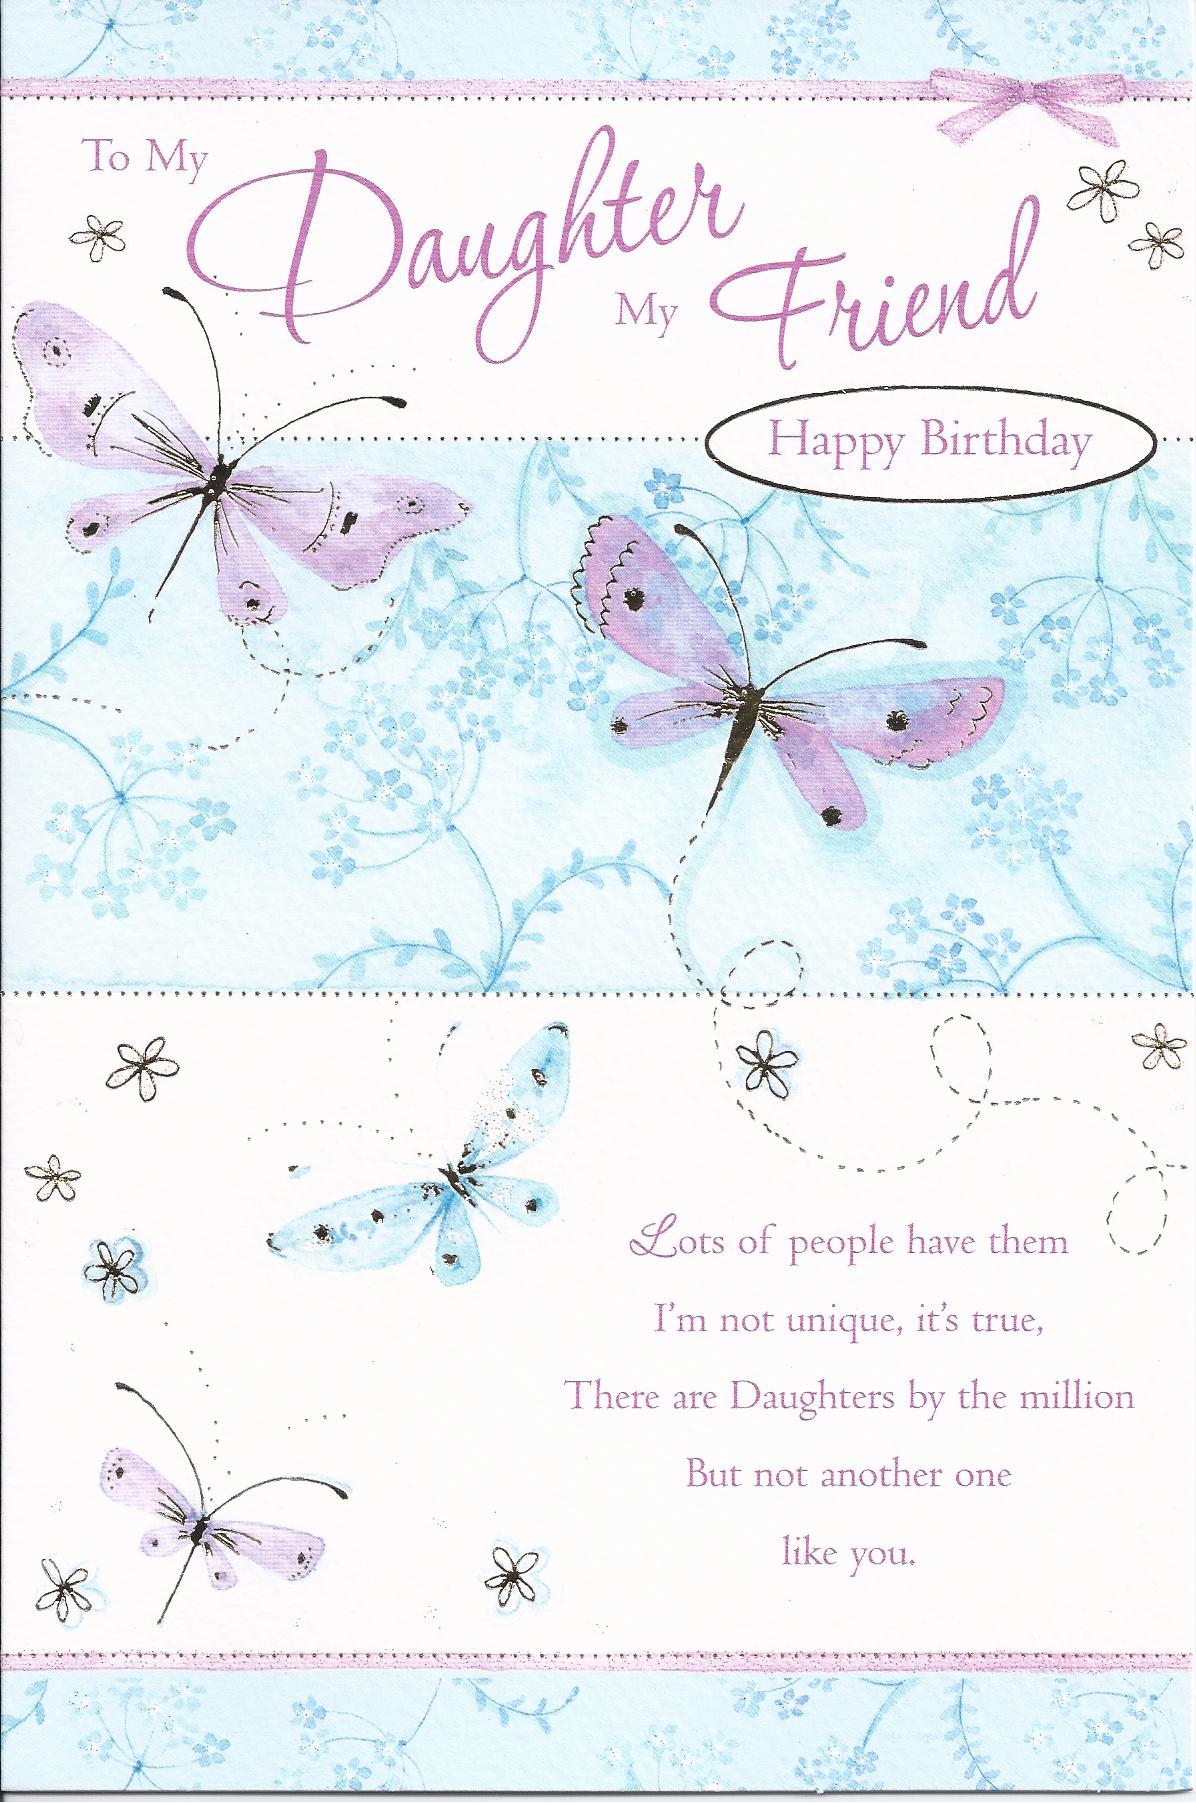 Daughter Birthday Card - Sleek And Pretty Butterflies